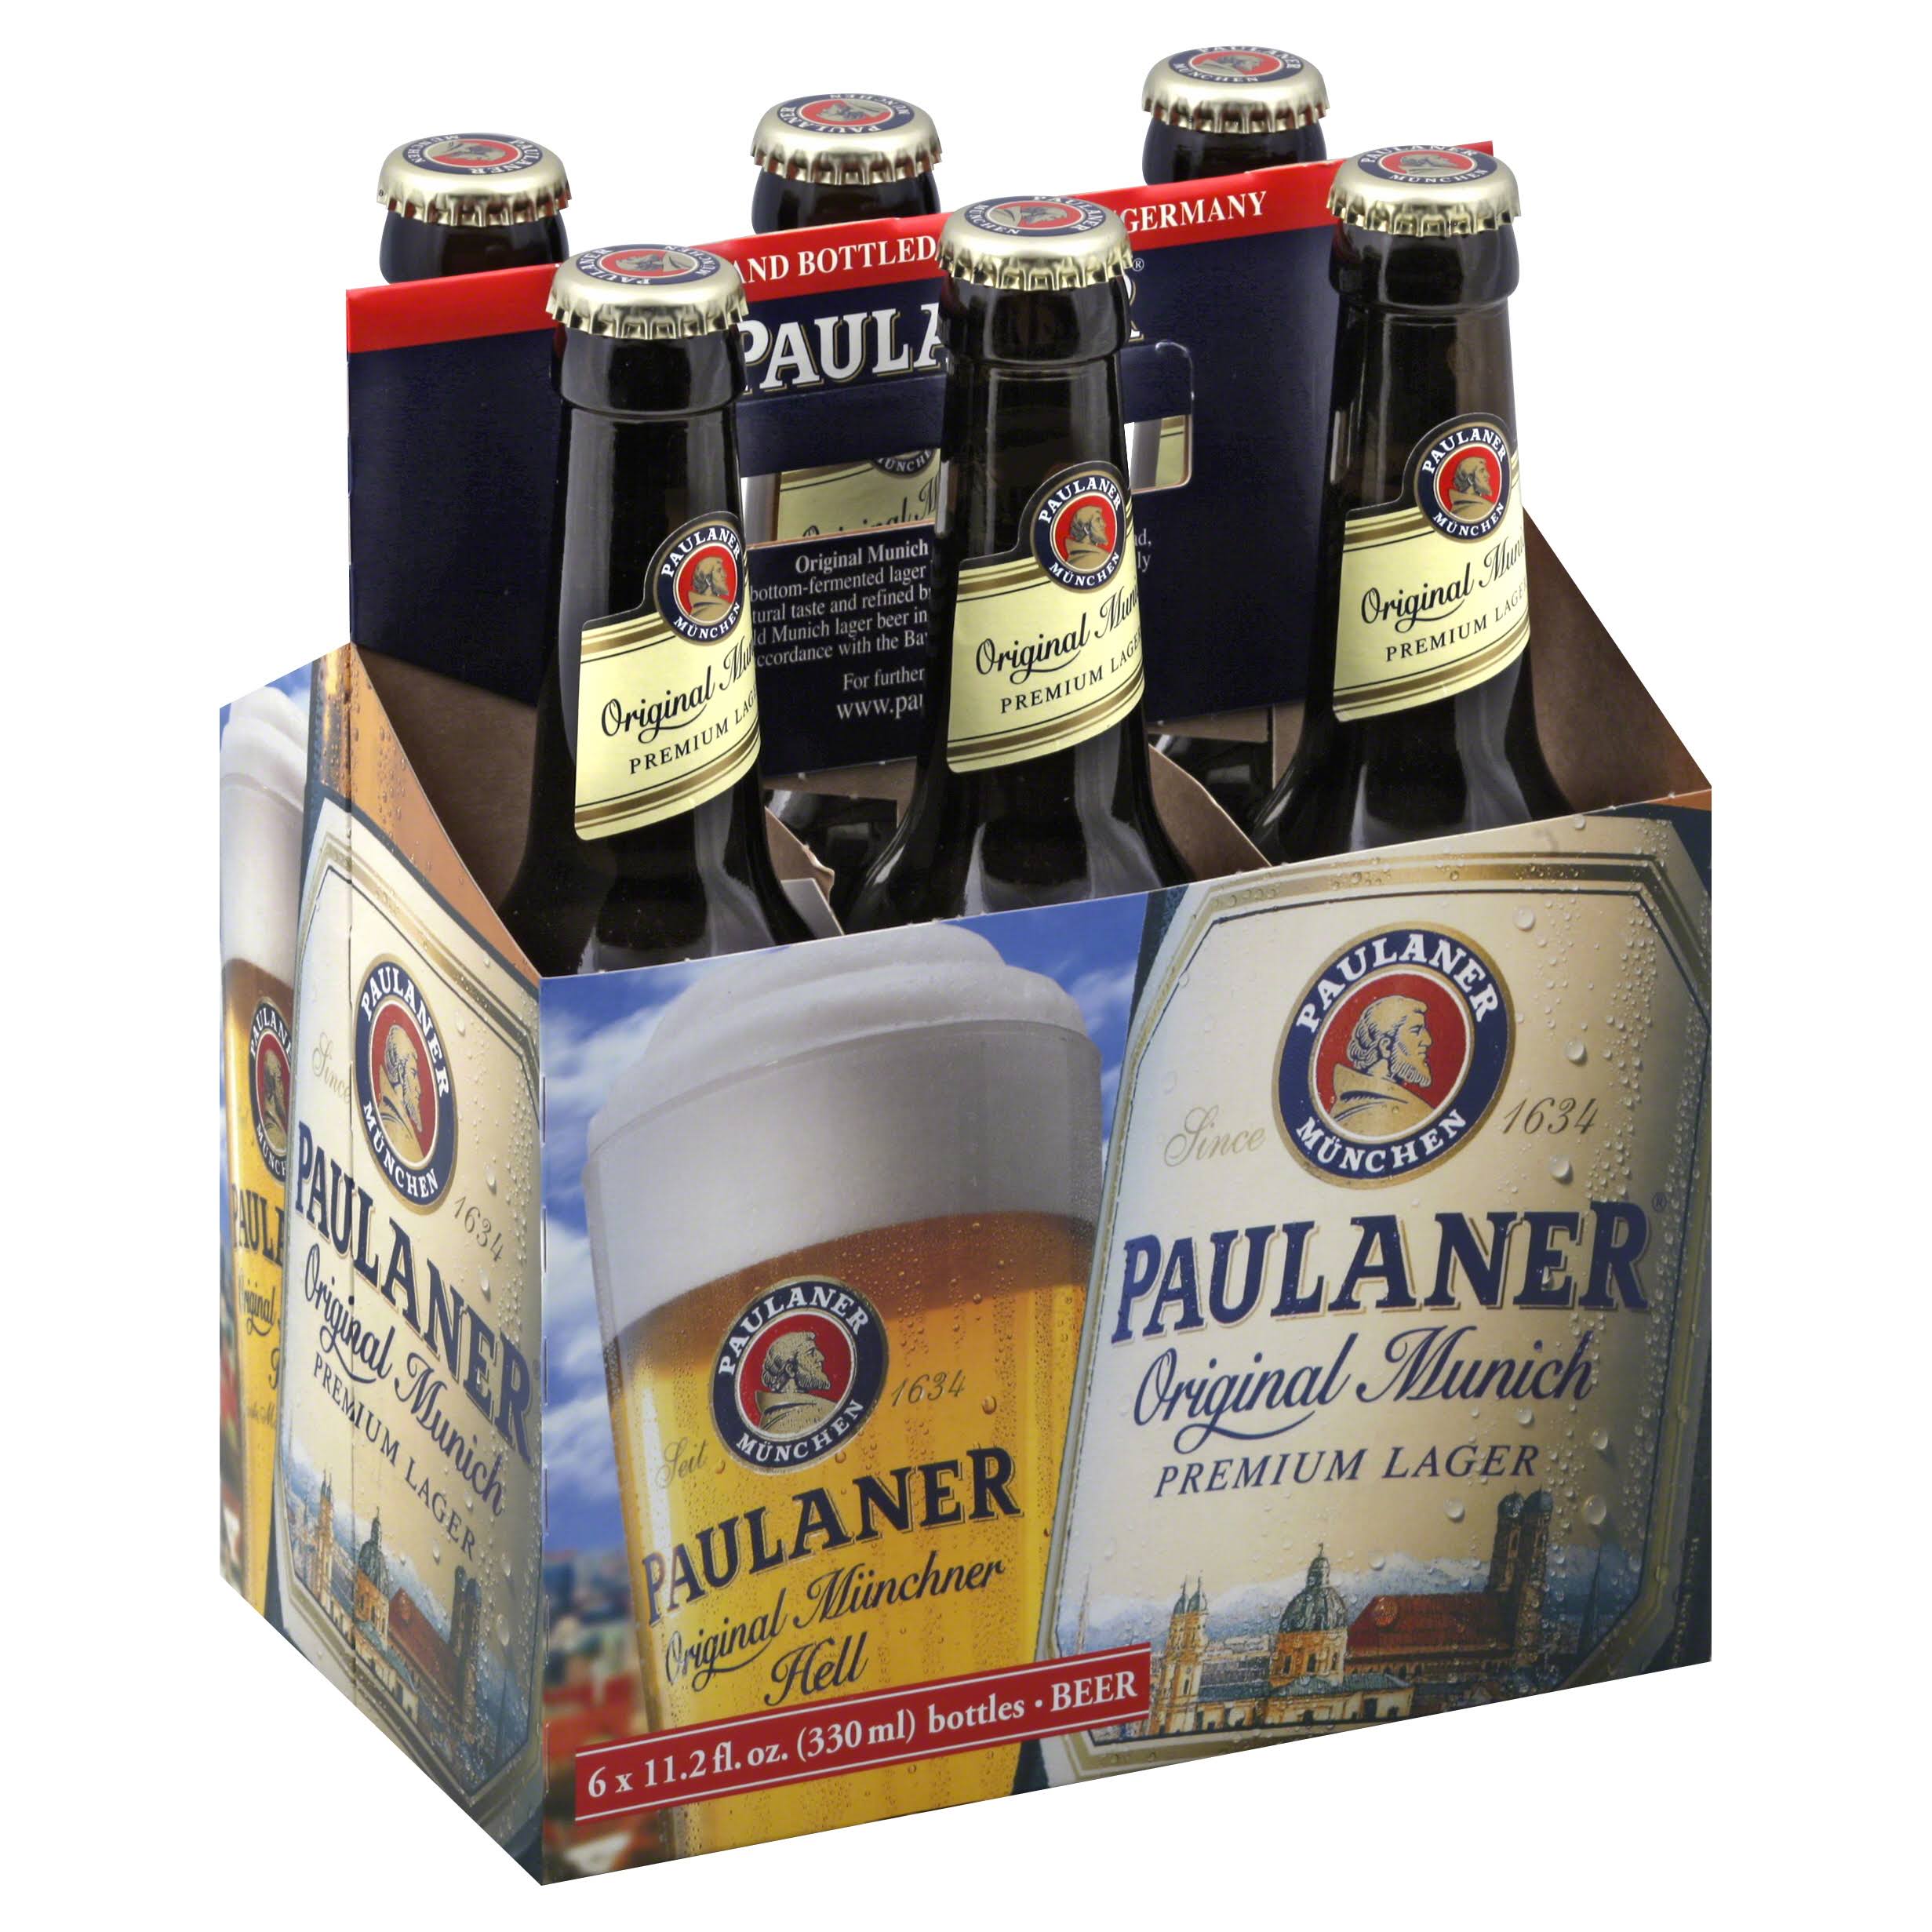 Paulaner Lager, Premium, Original Munich - 6 pack, 11.2 fl oz bottles